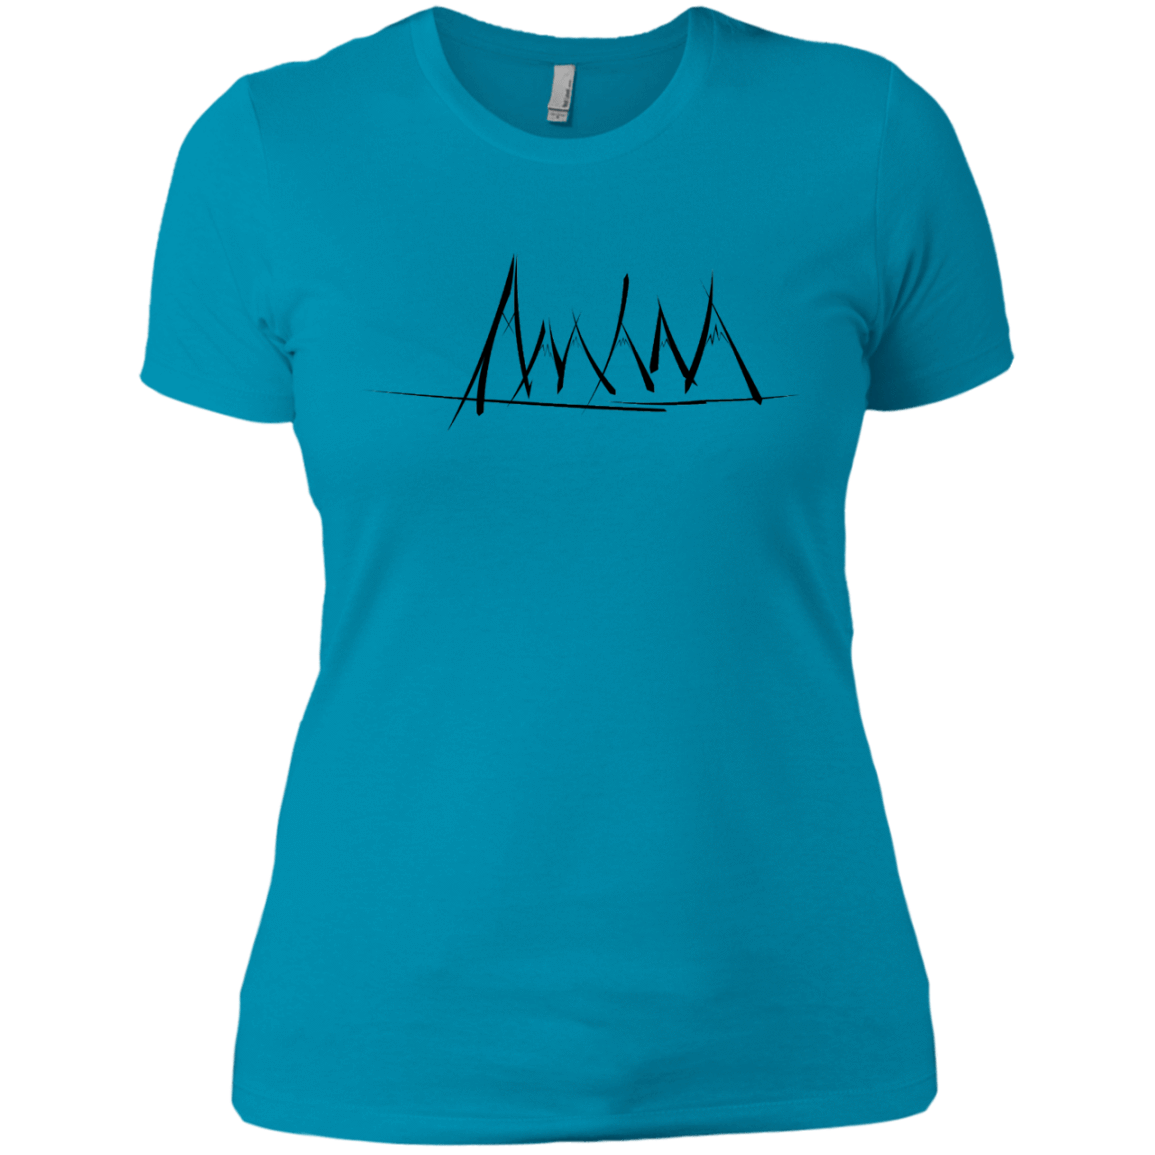 T-Shirts Turquoise / X-Small Mountain Brush Strokes Women's Premium T-Shirt